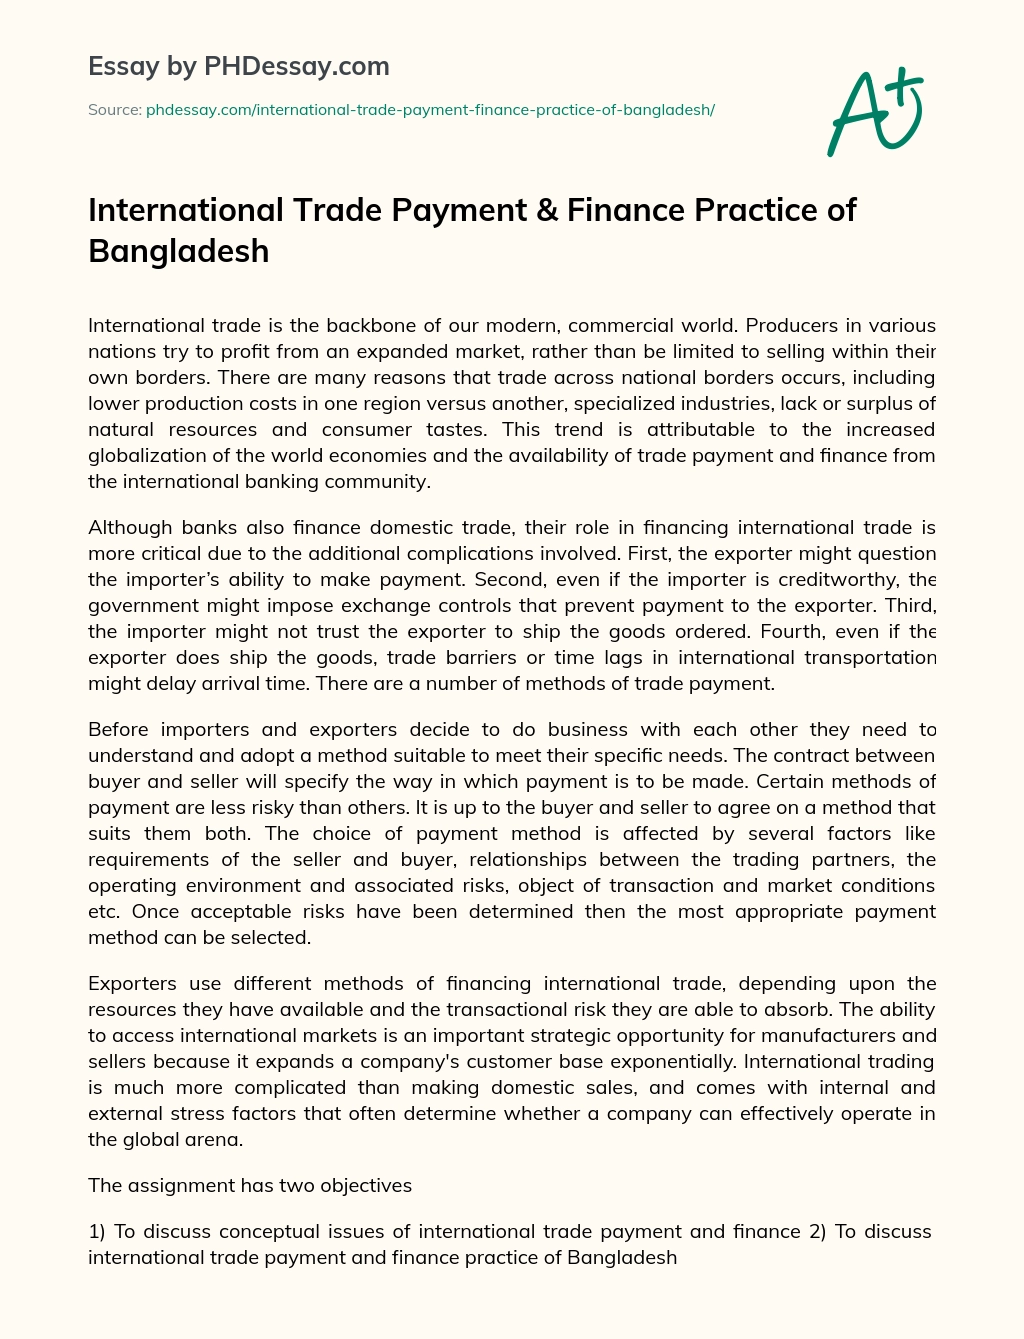 International Trade Payment & Finance Practice of Bangladesh essay